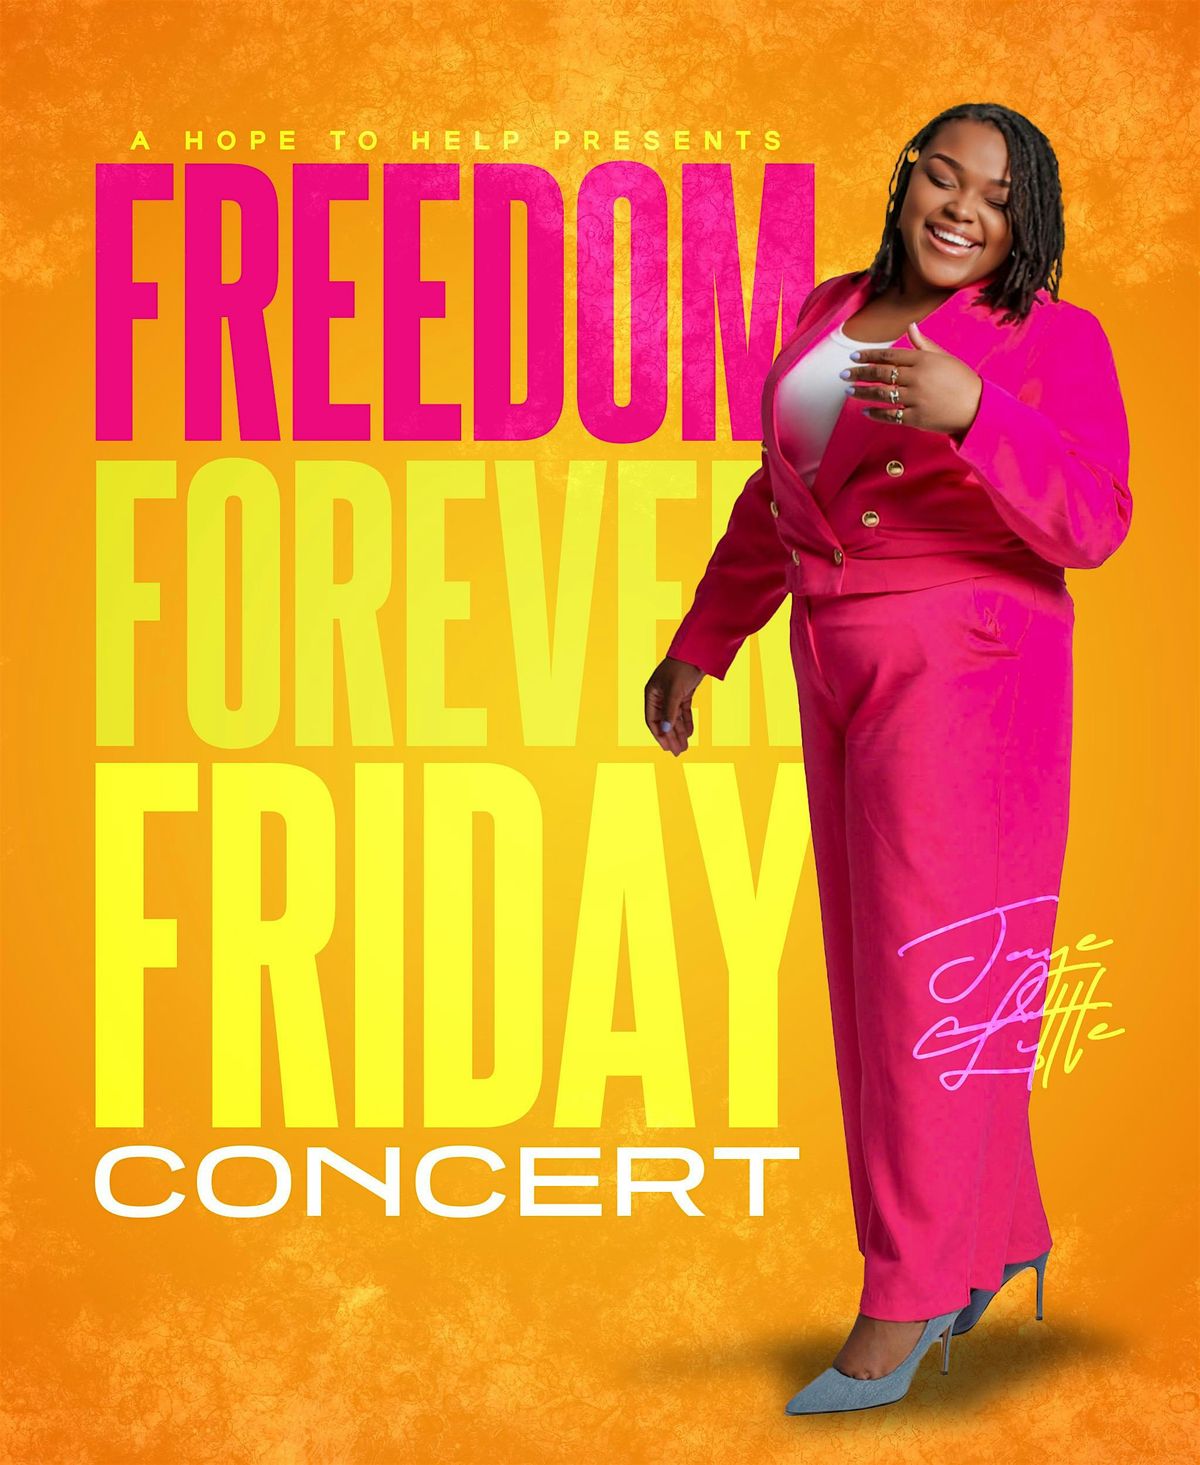 Freedom Forever Friday Concert